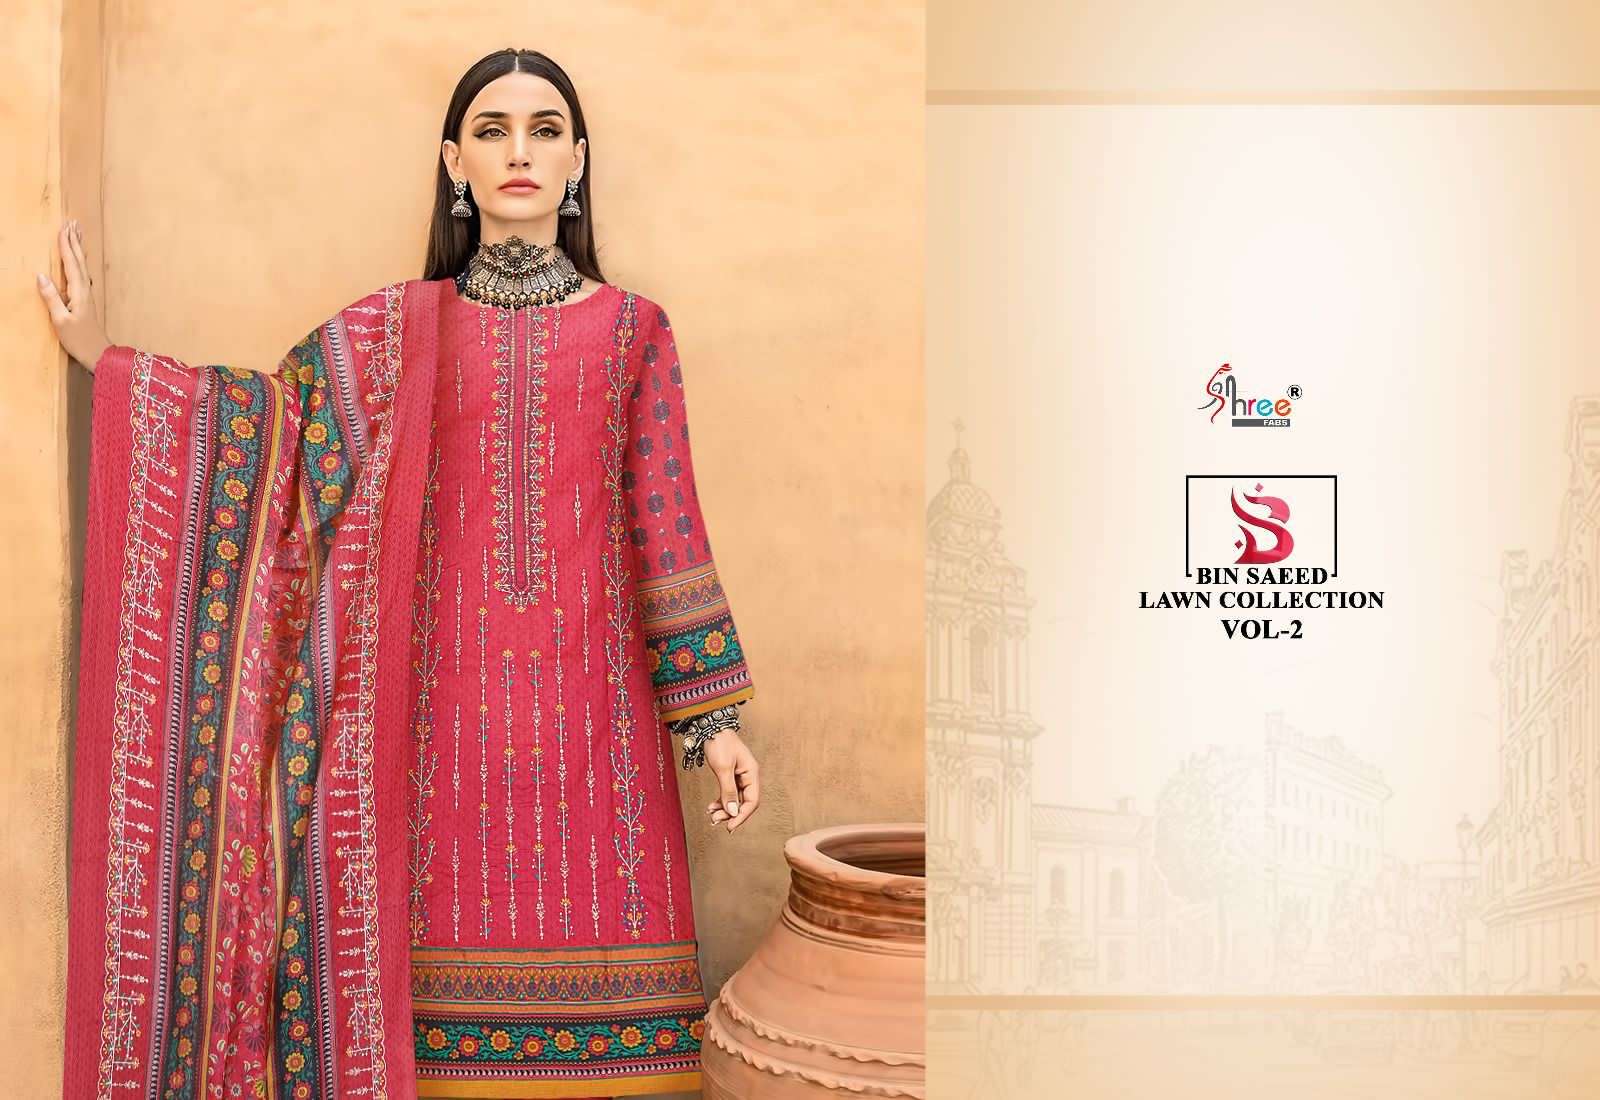 shree fabs bin sareed vol-2 2532-2536 series fancy designer pakistani salwar kameez wholesale price surat 